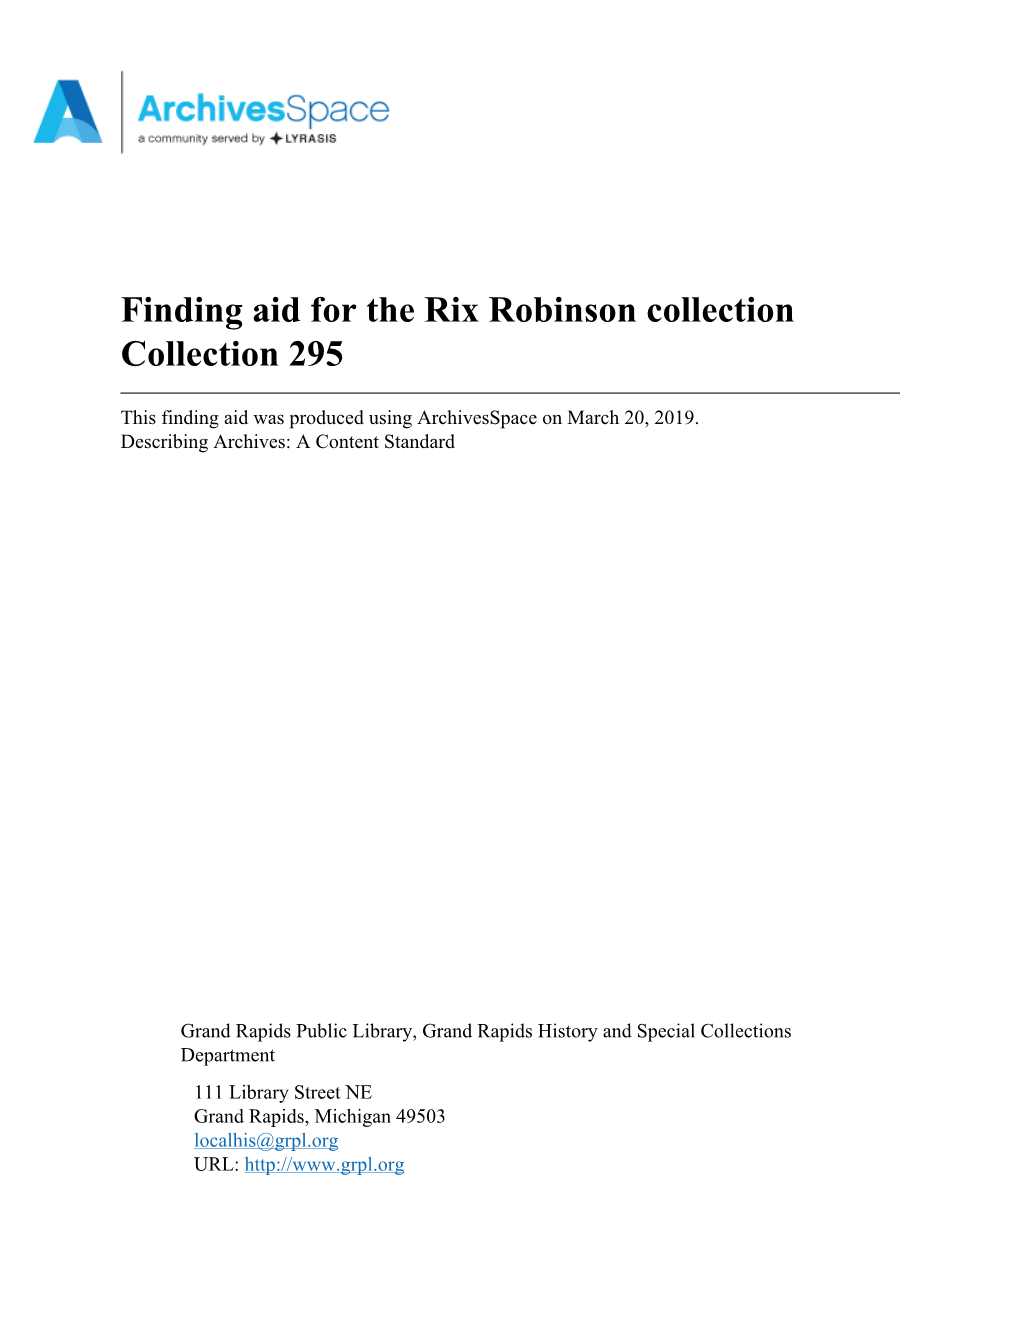 Rix Robinson Collection Collection 295